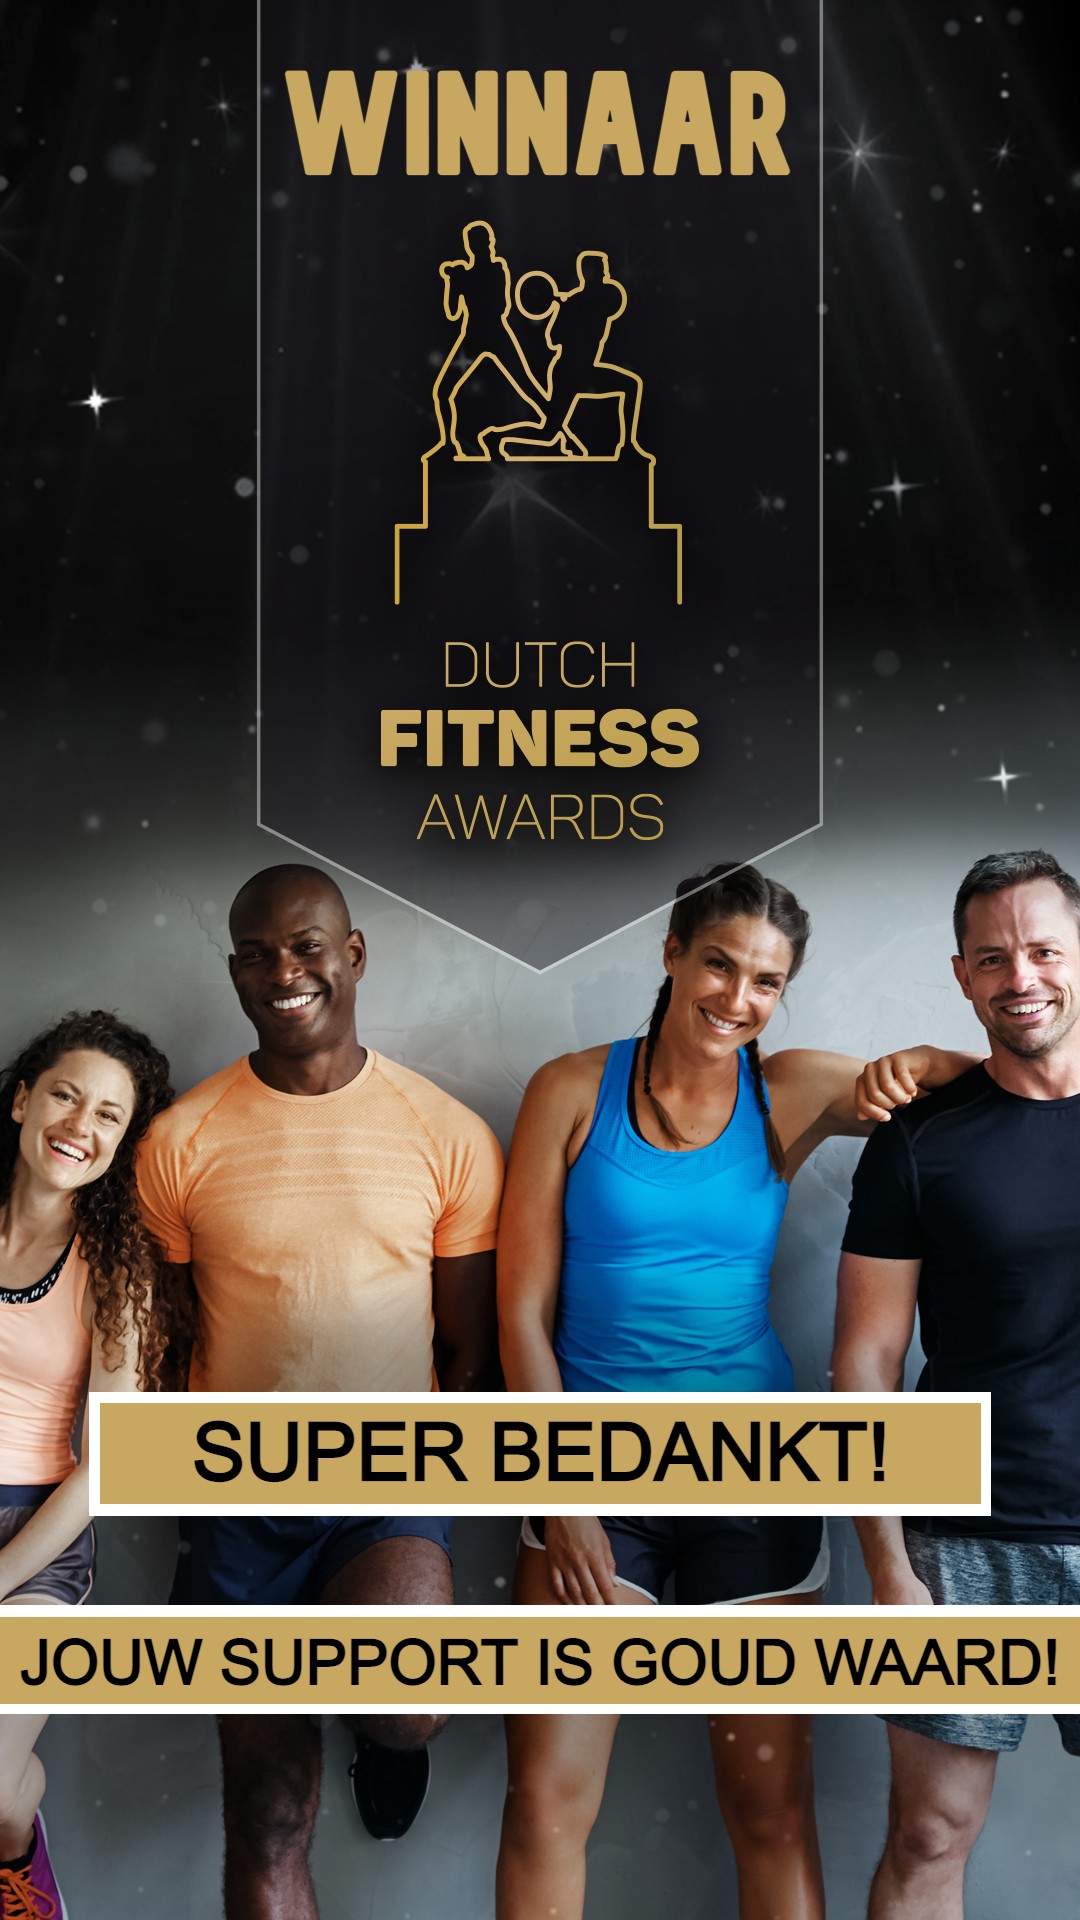 Winnaar Dutch Fitness Awards 2022